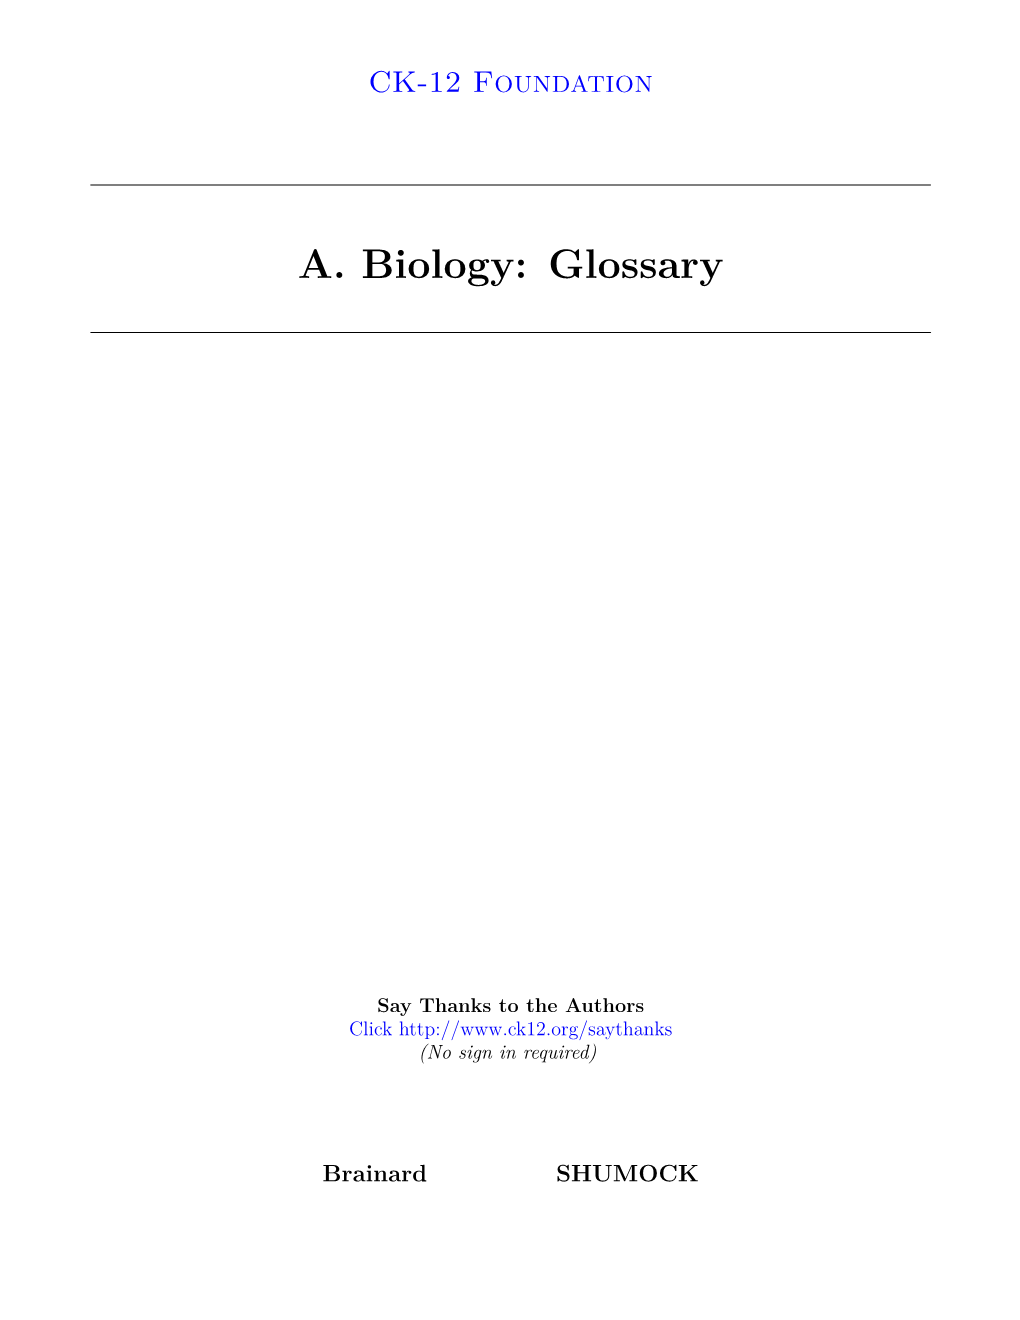 A. Biology: Glossary